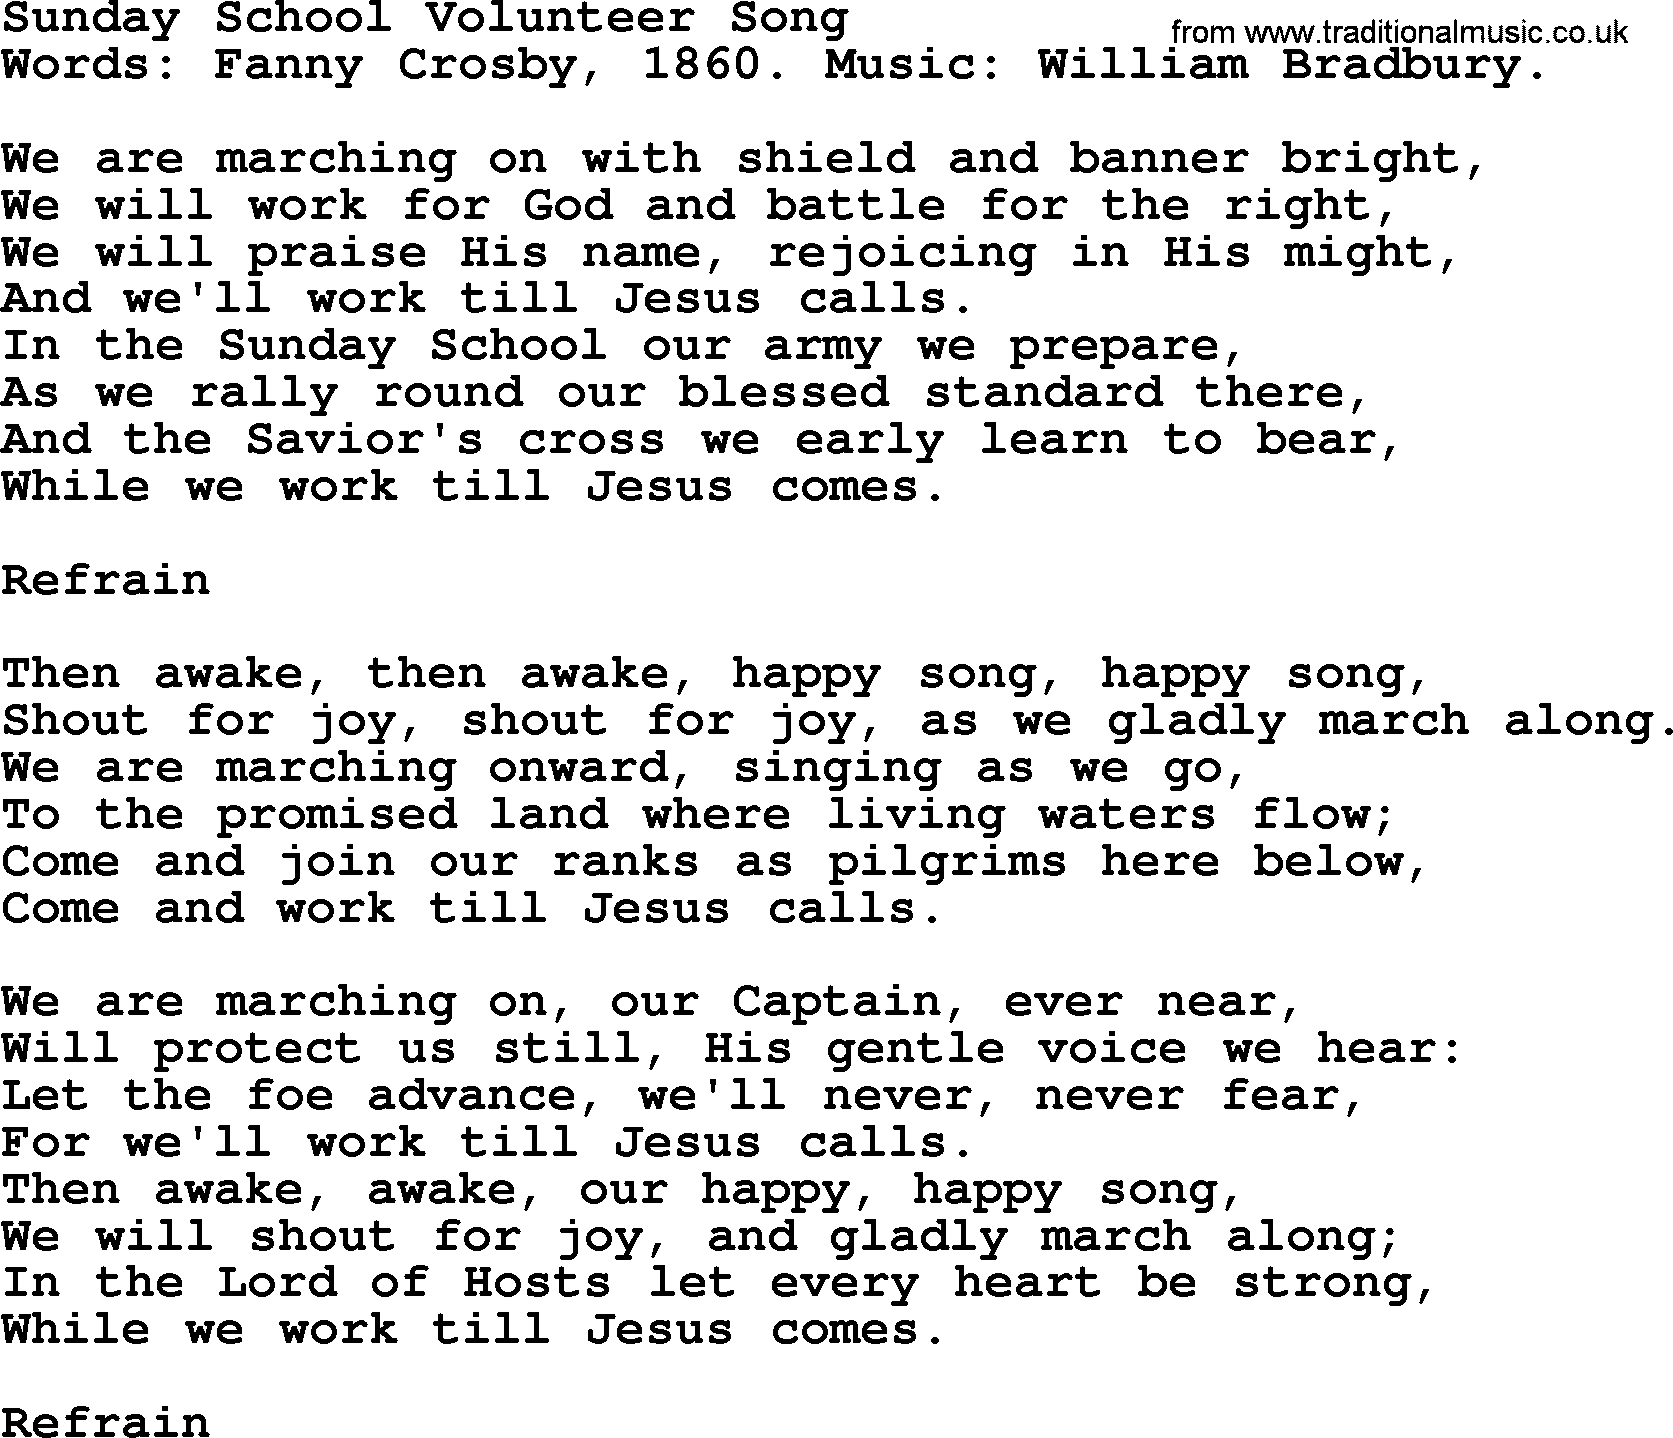 Fanny Crosby song: Sunday School Volunteer Song, lyrics